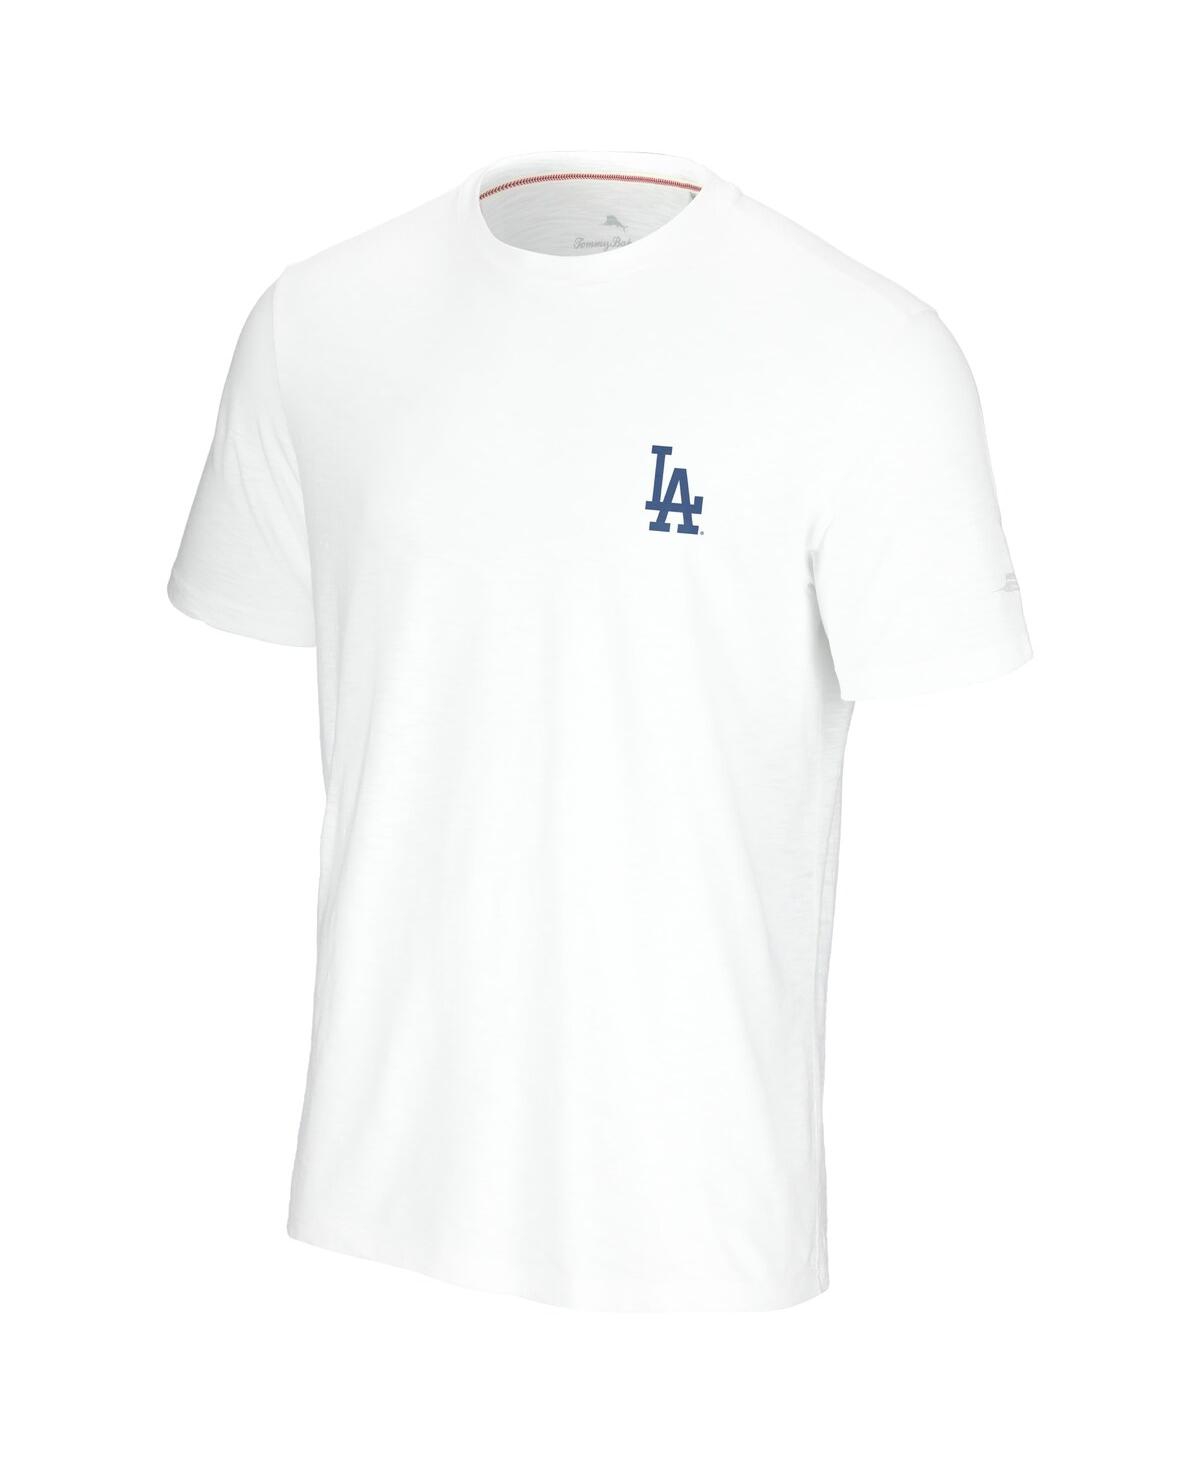 Los Angeles Dodgers Tommy Bahama Playa ball baseball pitch shirt